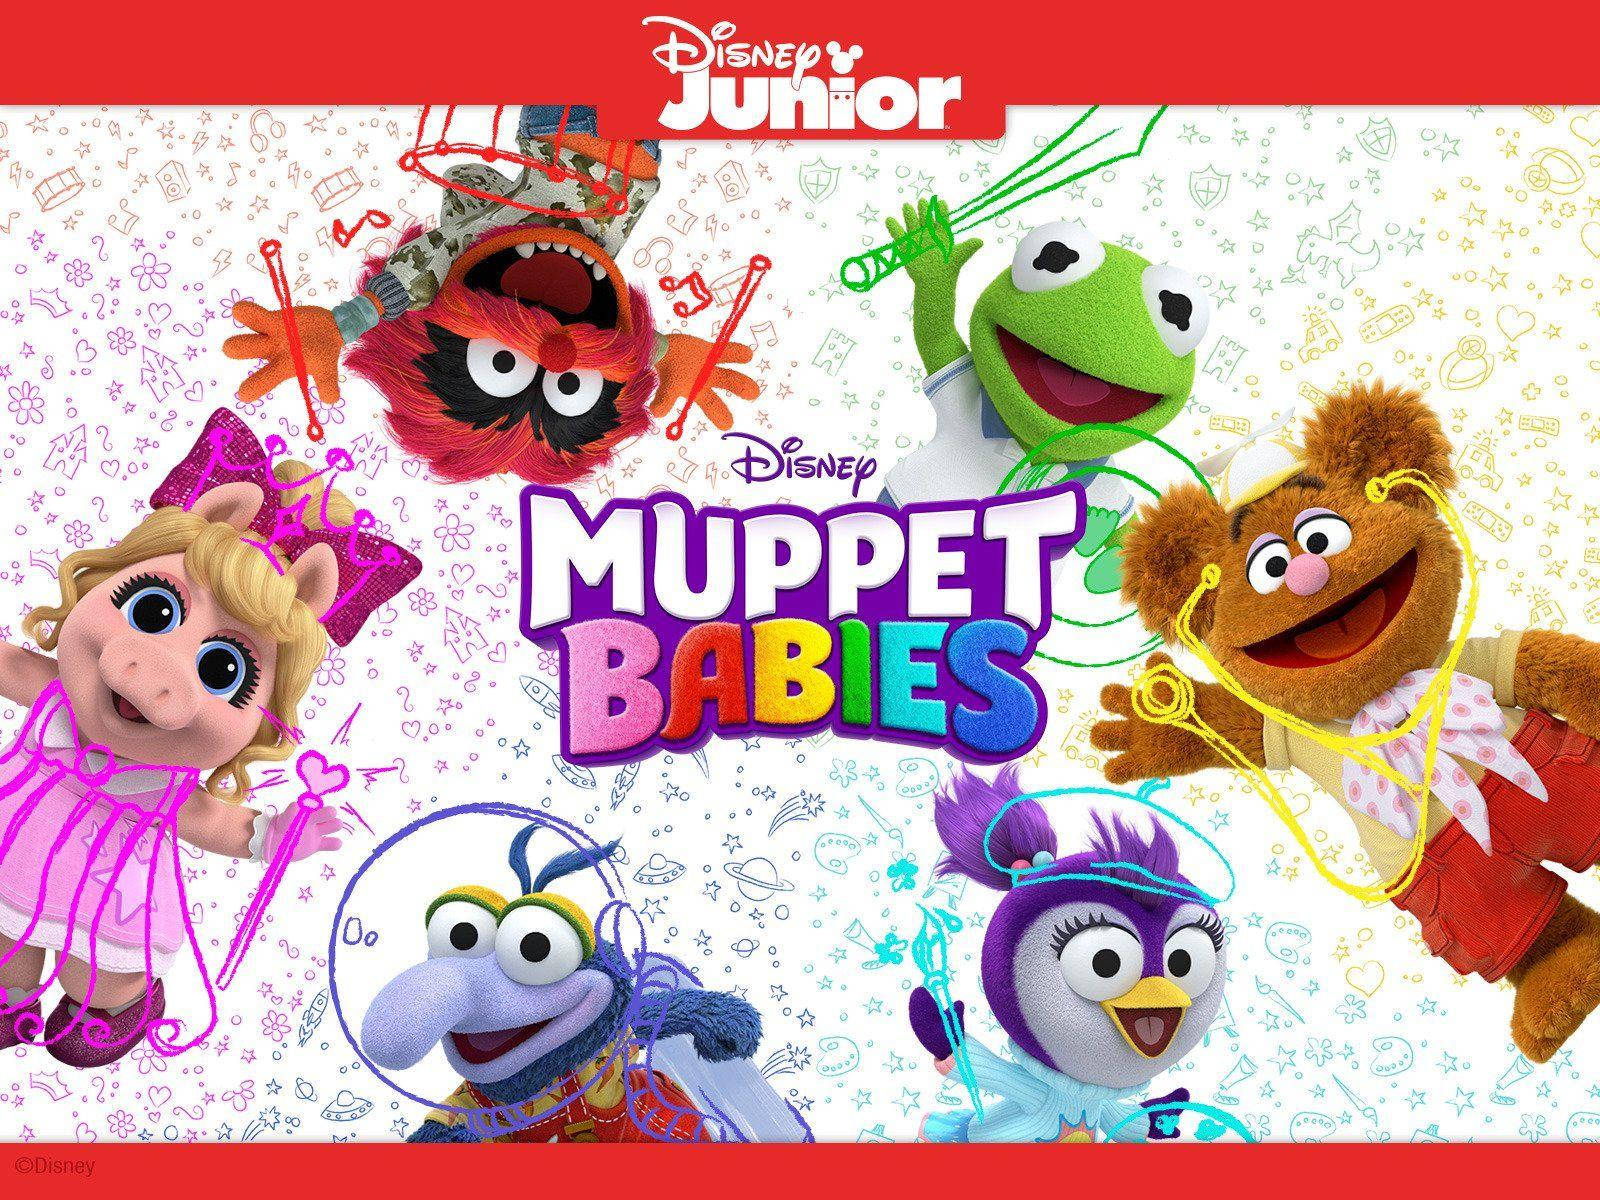 Disney Muppet Babies Characters Poster Wallpaper